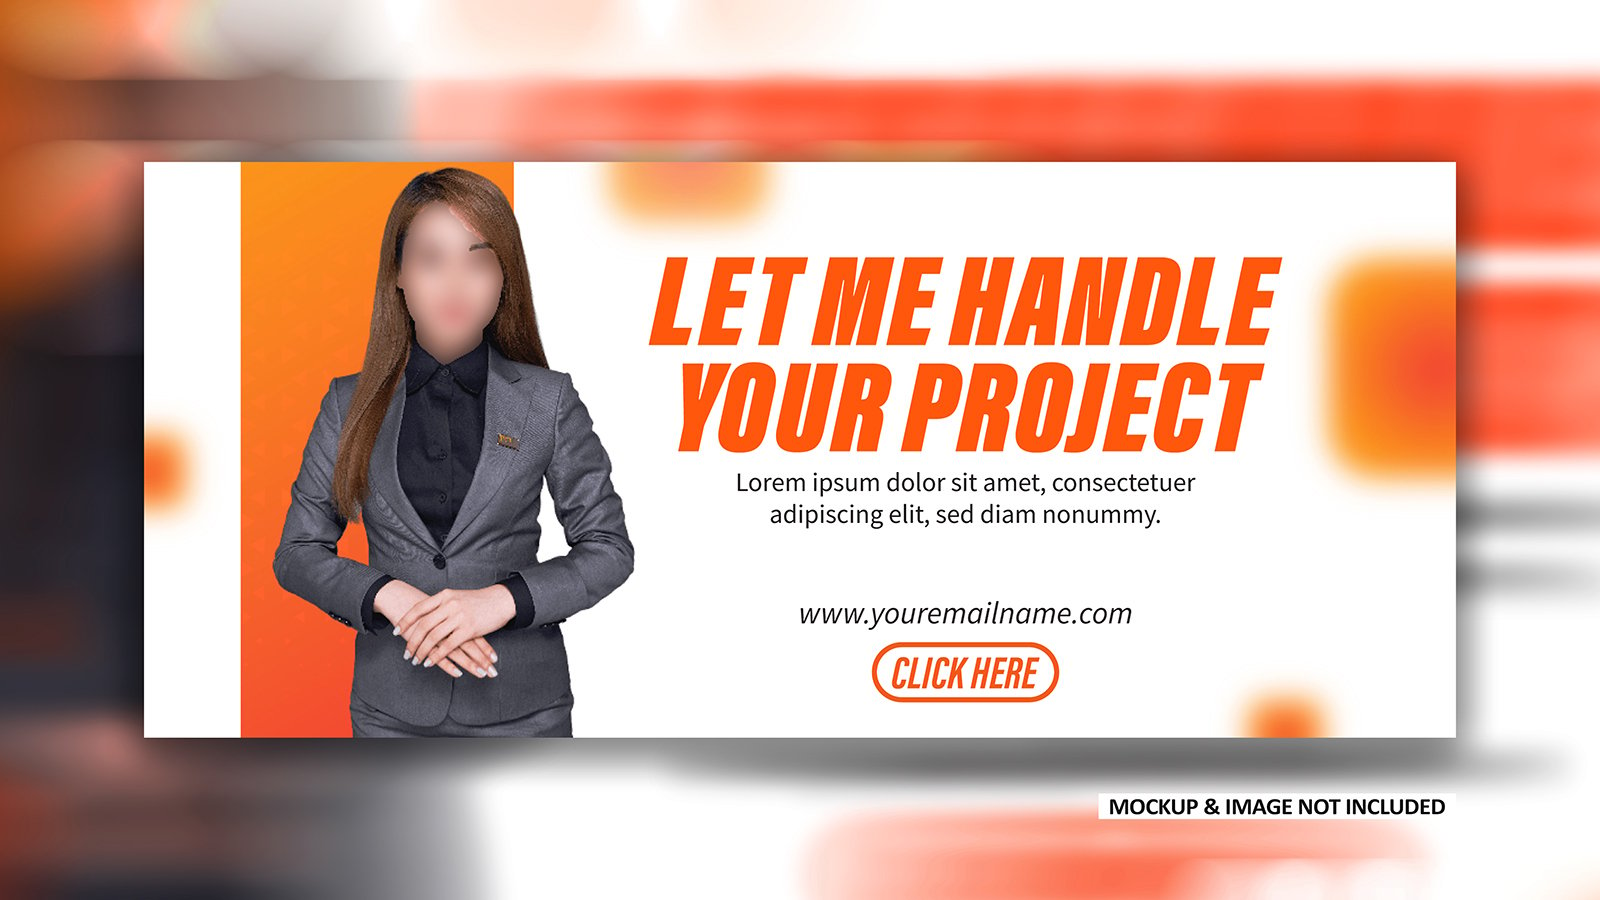 Social media project hiring promotional ads banner EPS design template